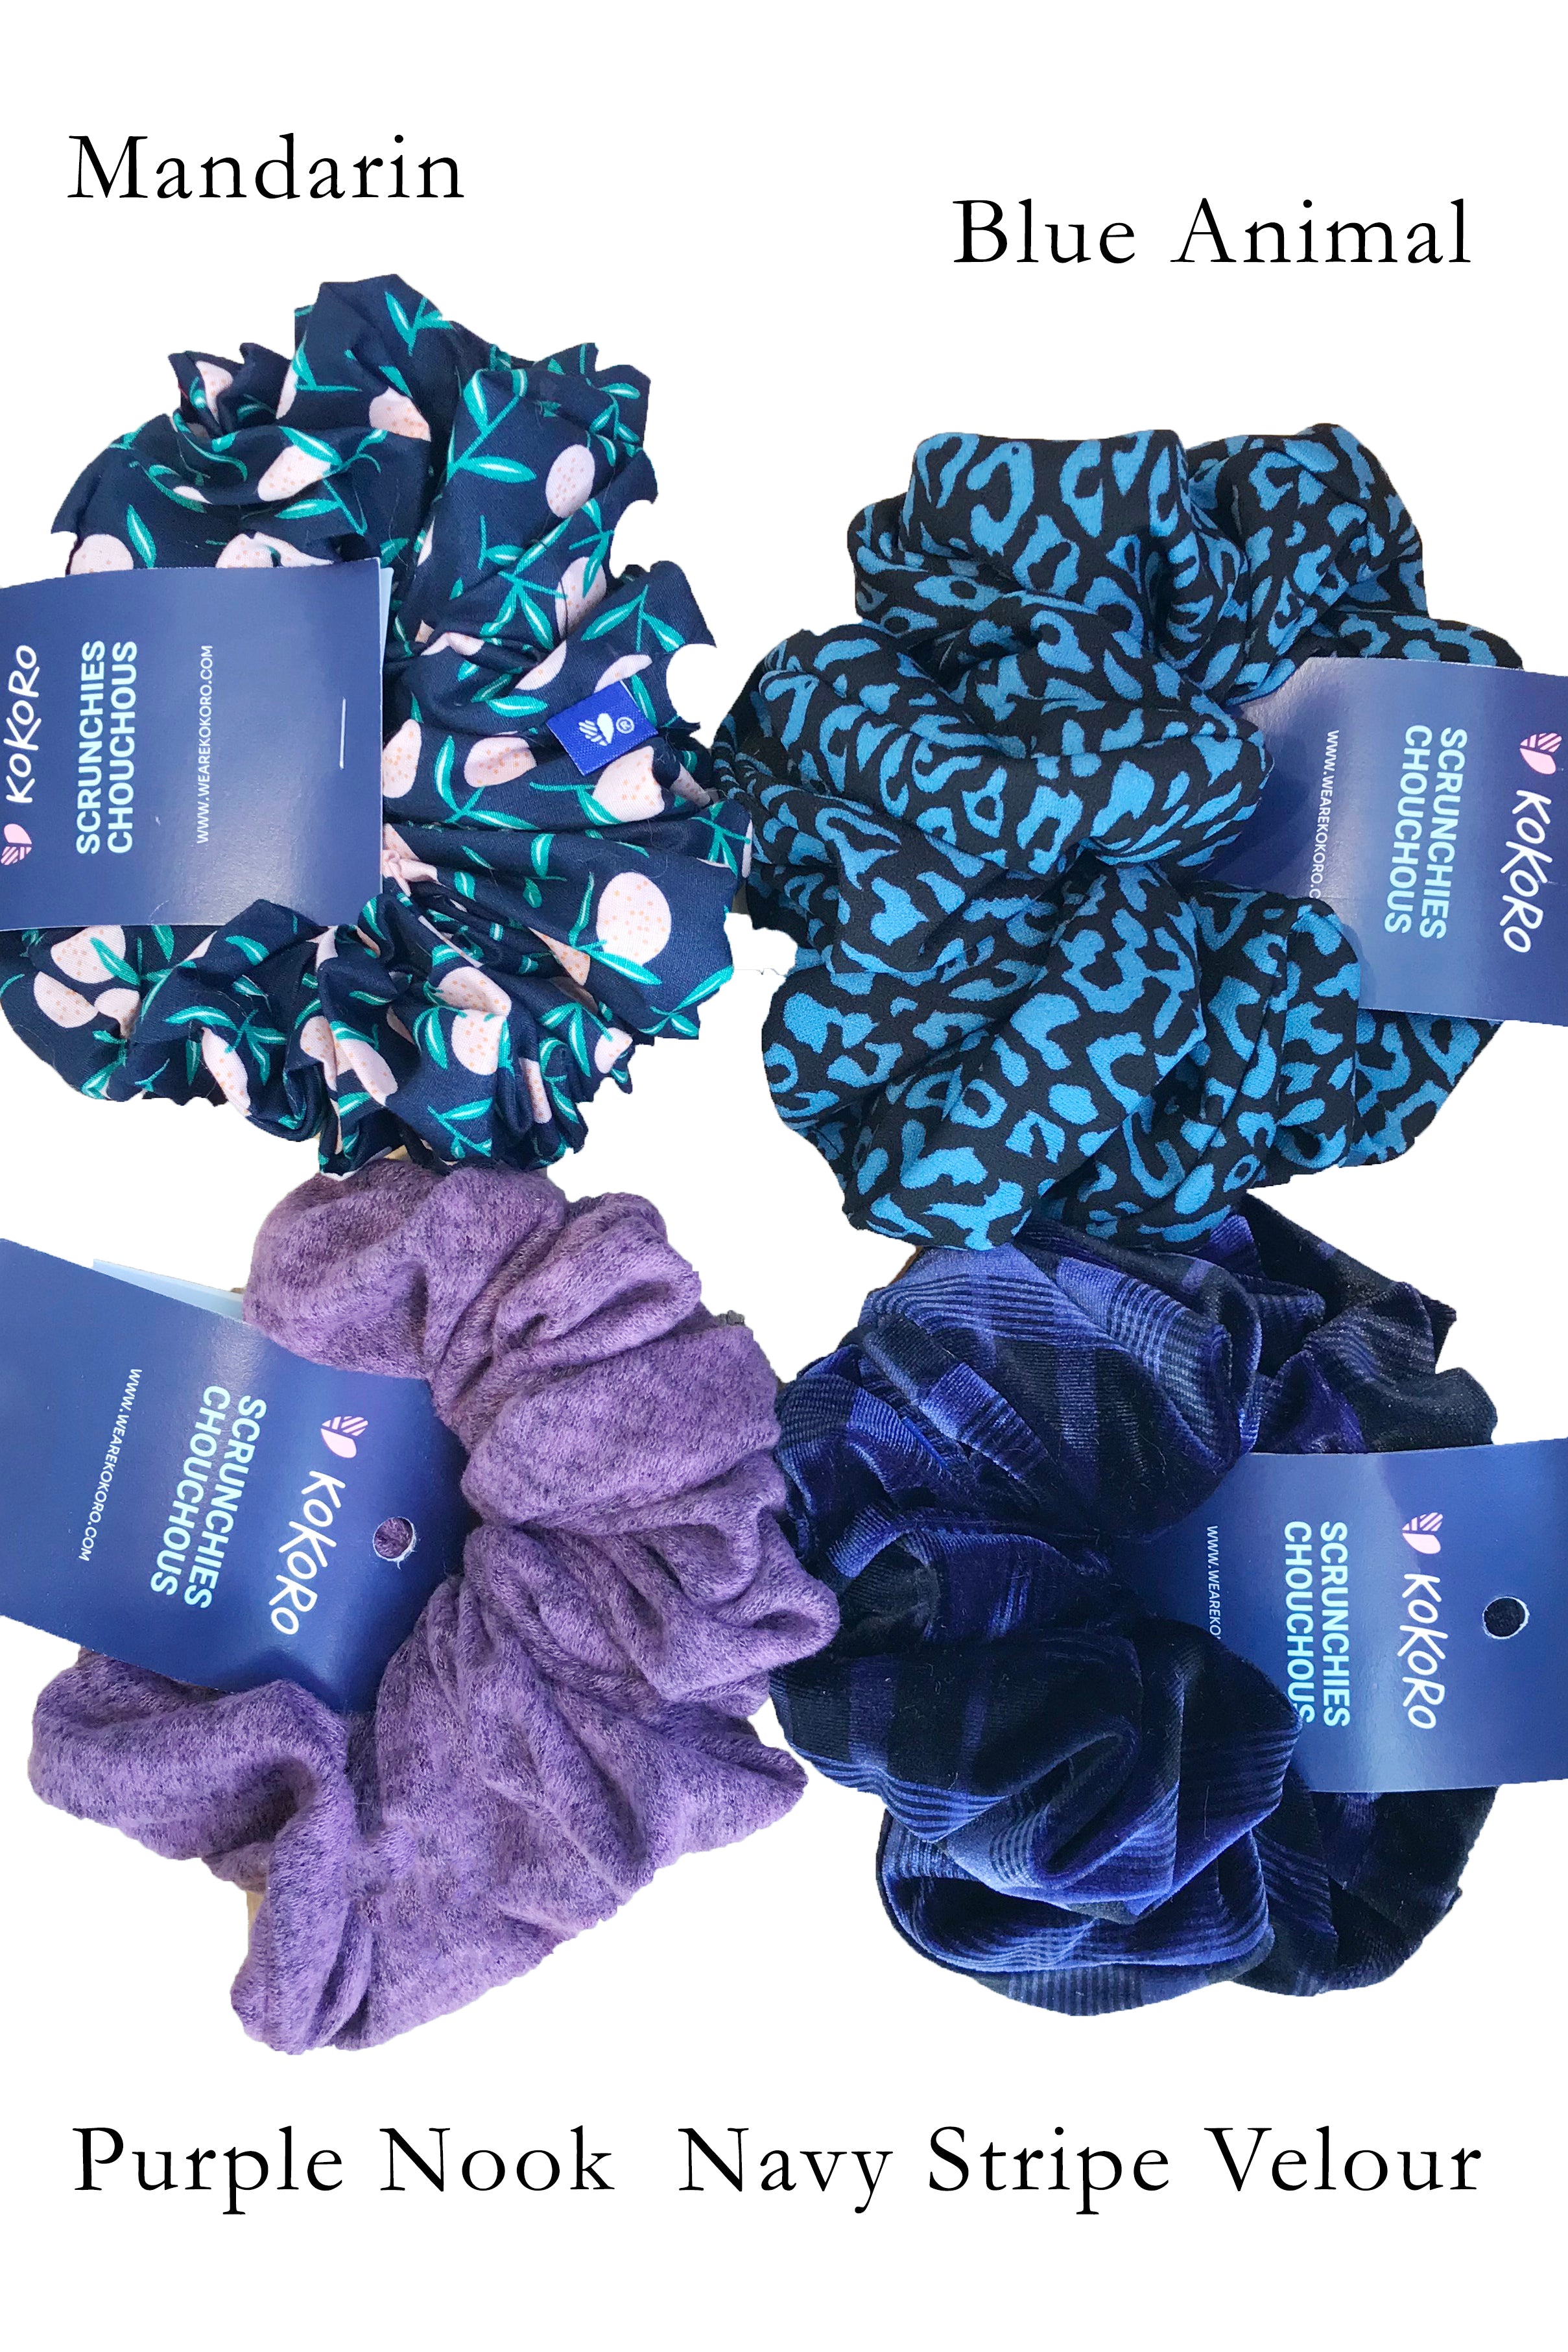 XL Oversized Scrunchie by Kokoro, Mandarin, Blue Animal, Purple Nook, Navy Stripe Velour